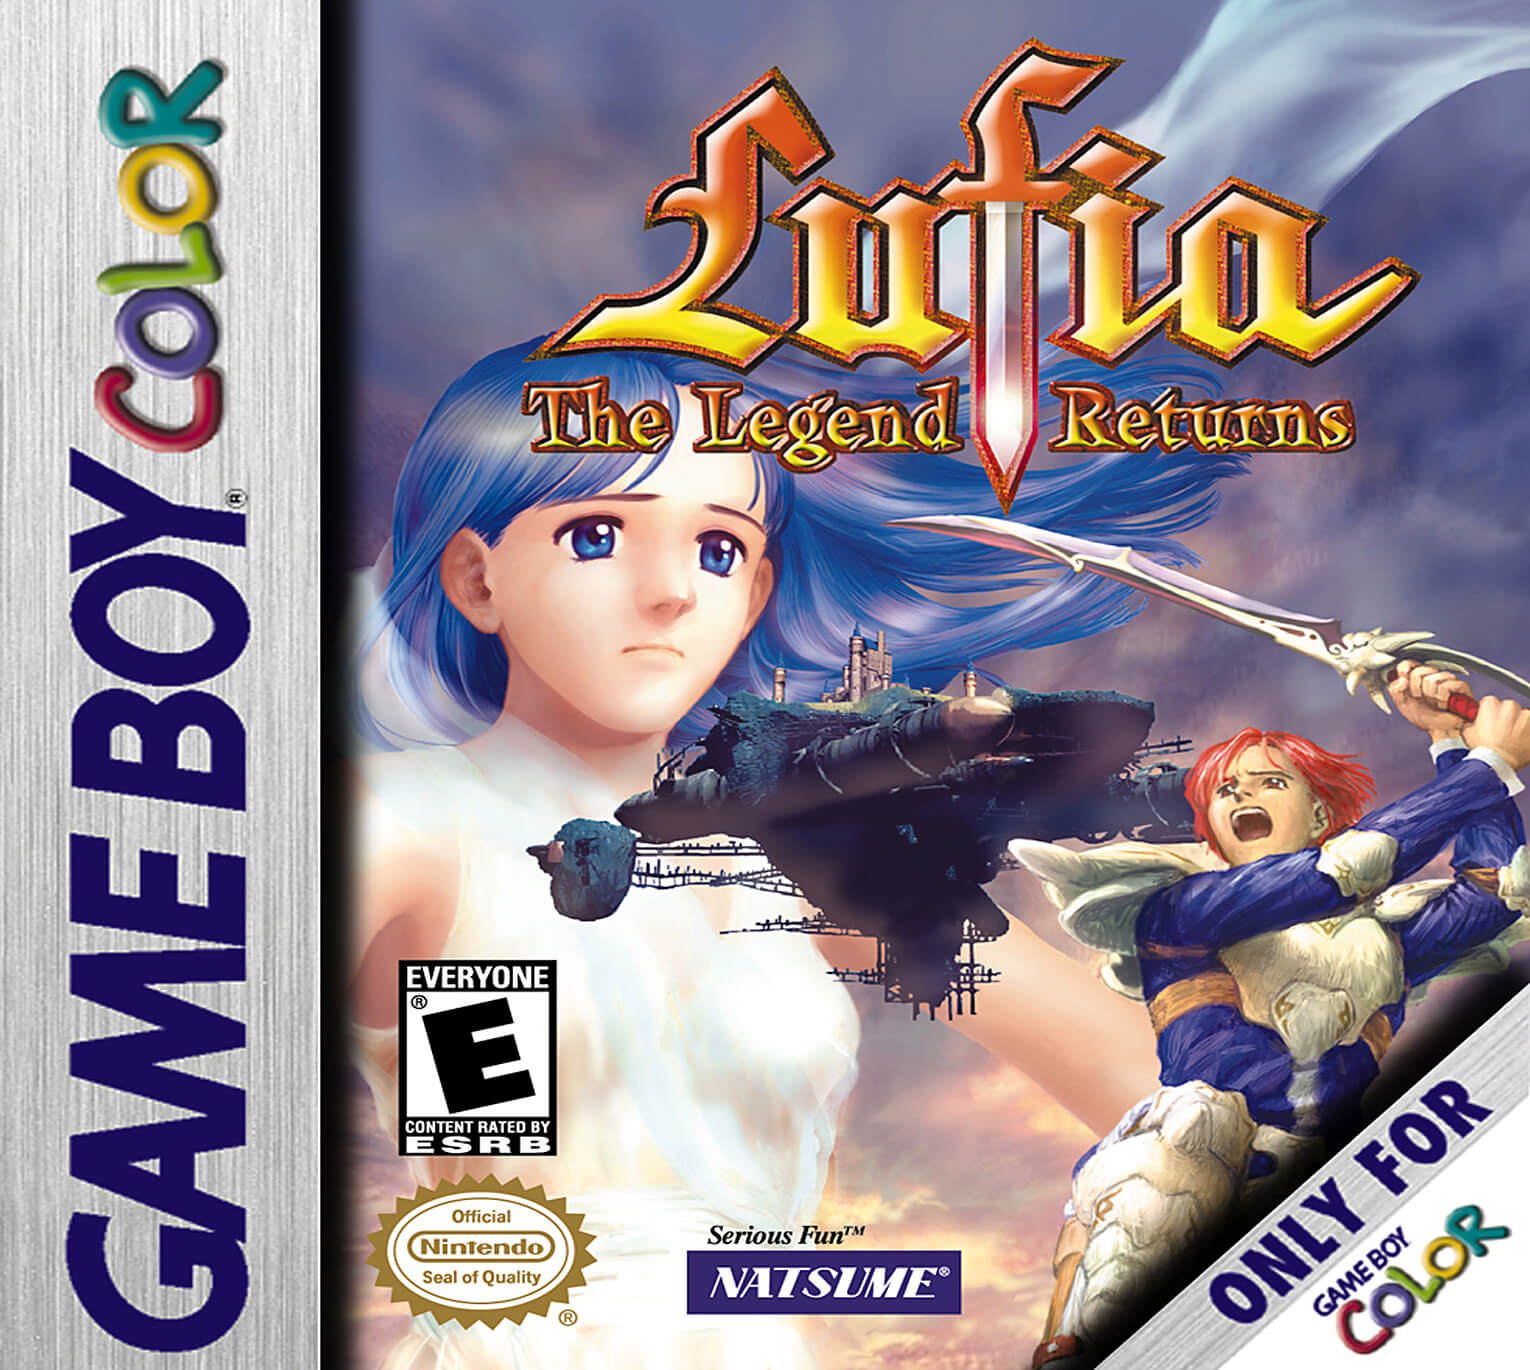 The legendary return. Lufia: the Legend Returns. Lufia - the Legend Returns (USA).GBC. Легенд ретурн. Lufia ROM.